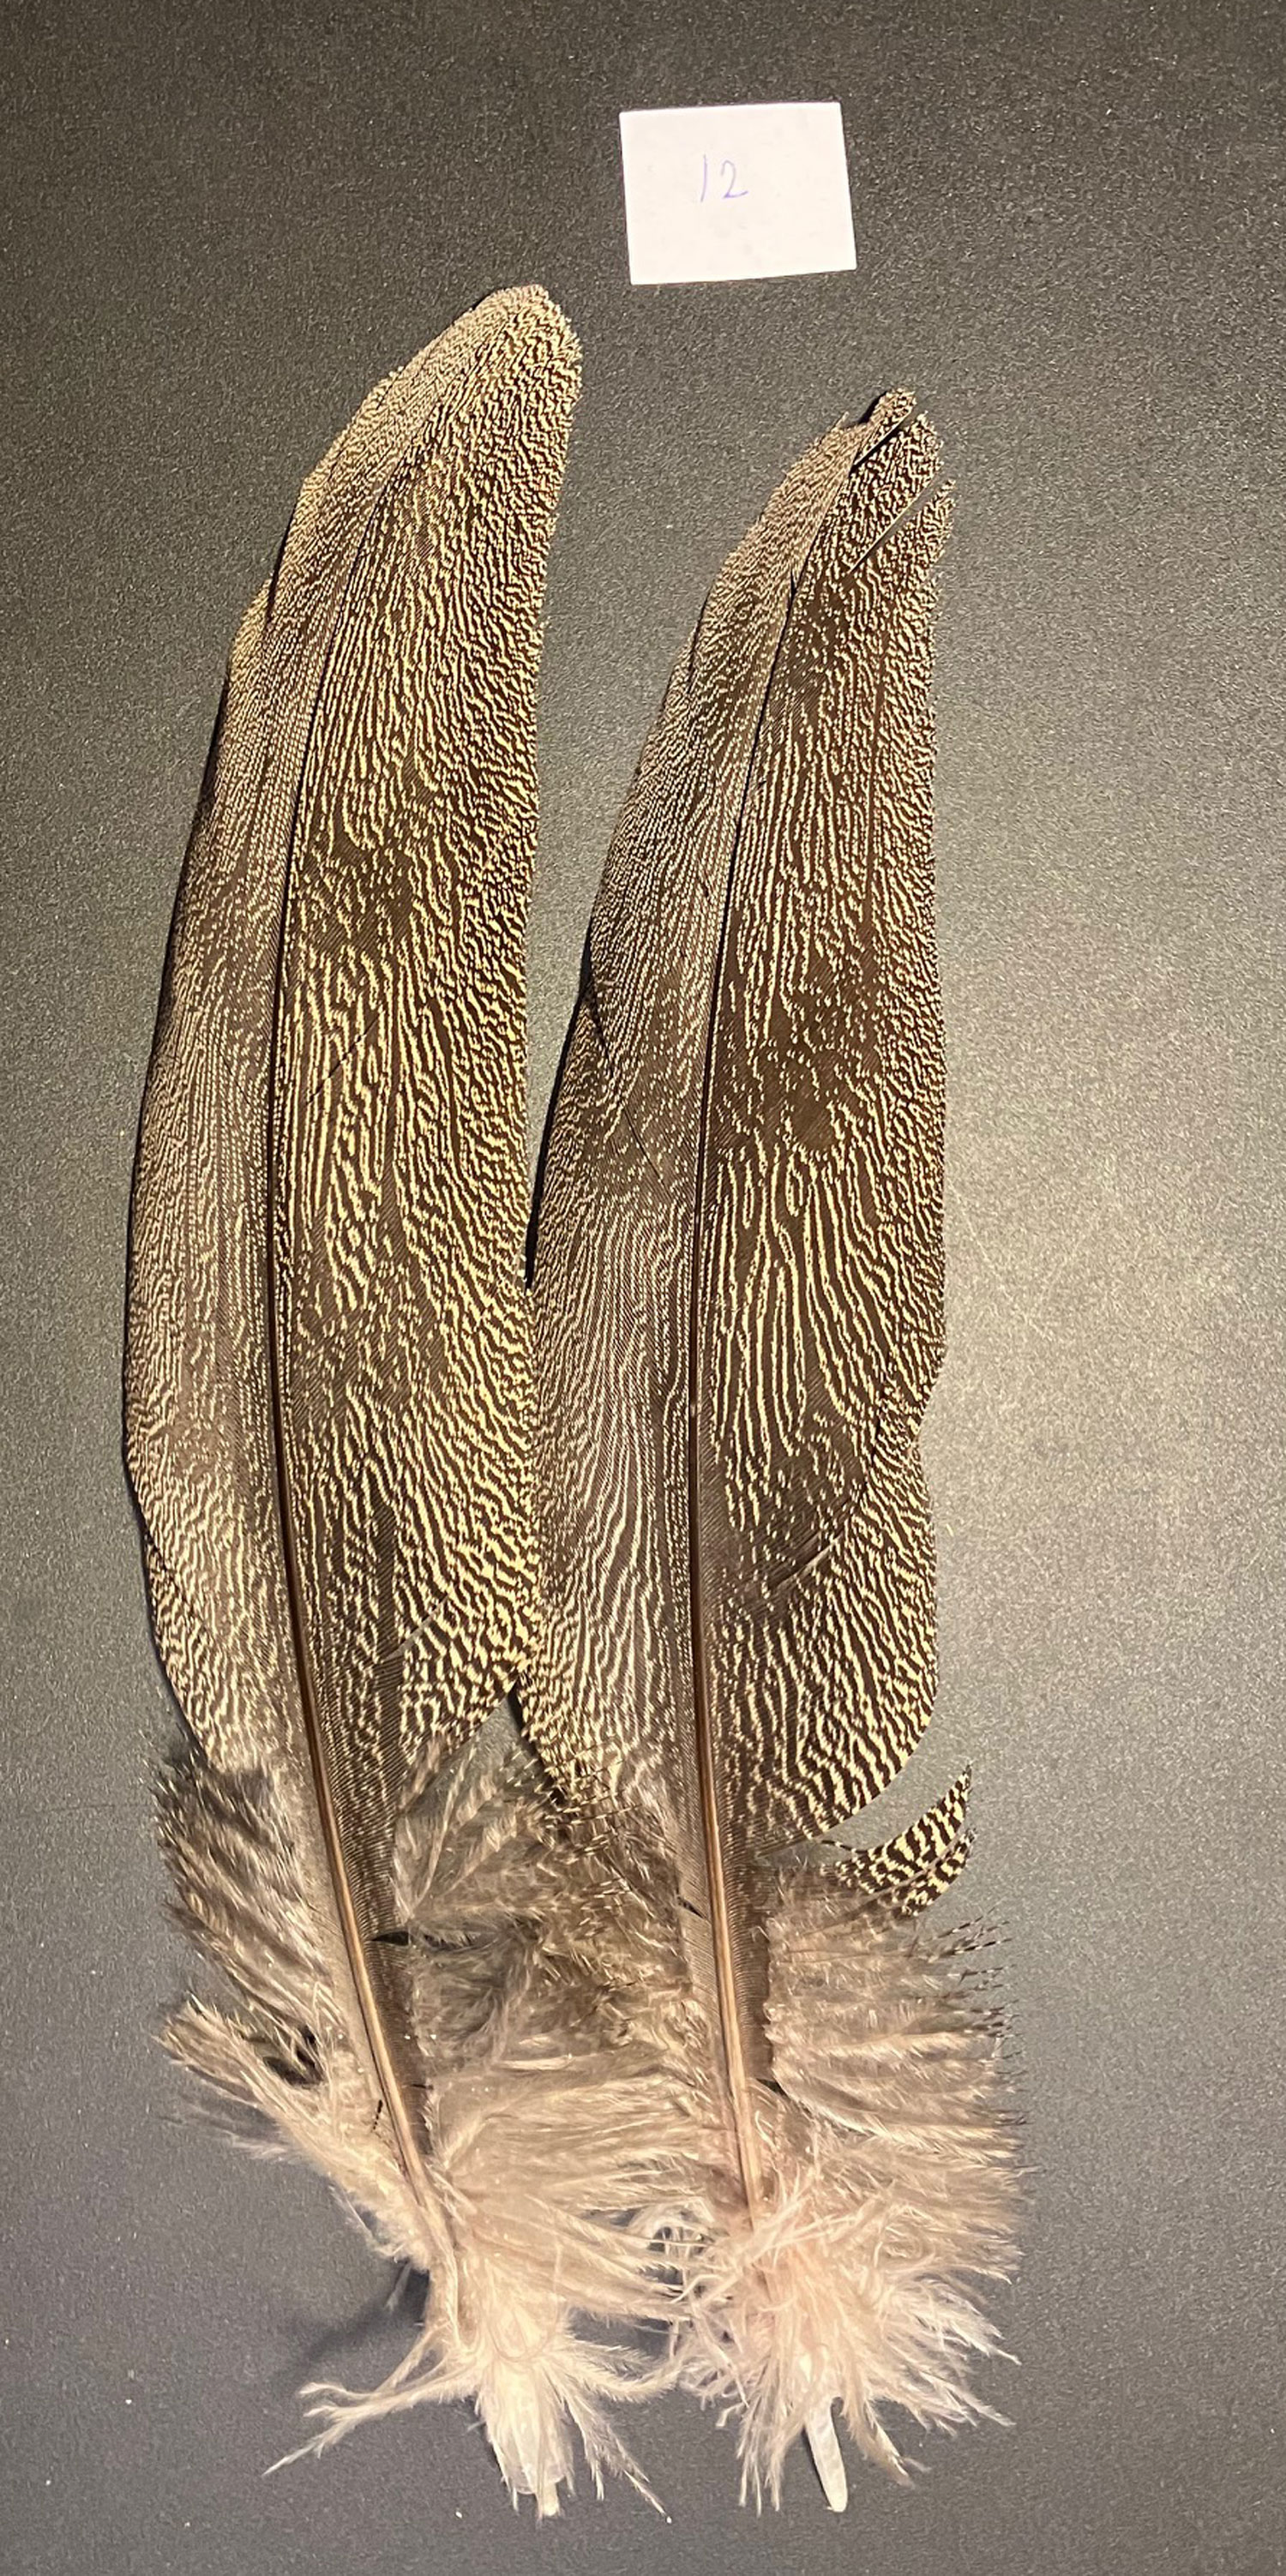 Kori bustard shoulder feather 12